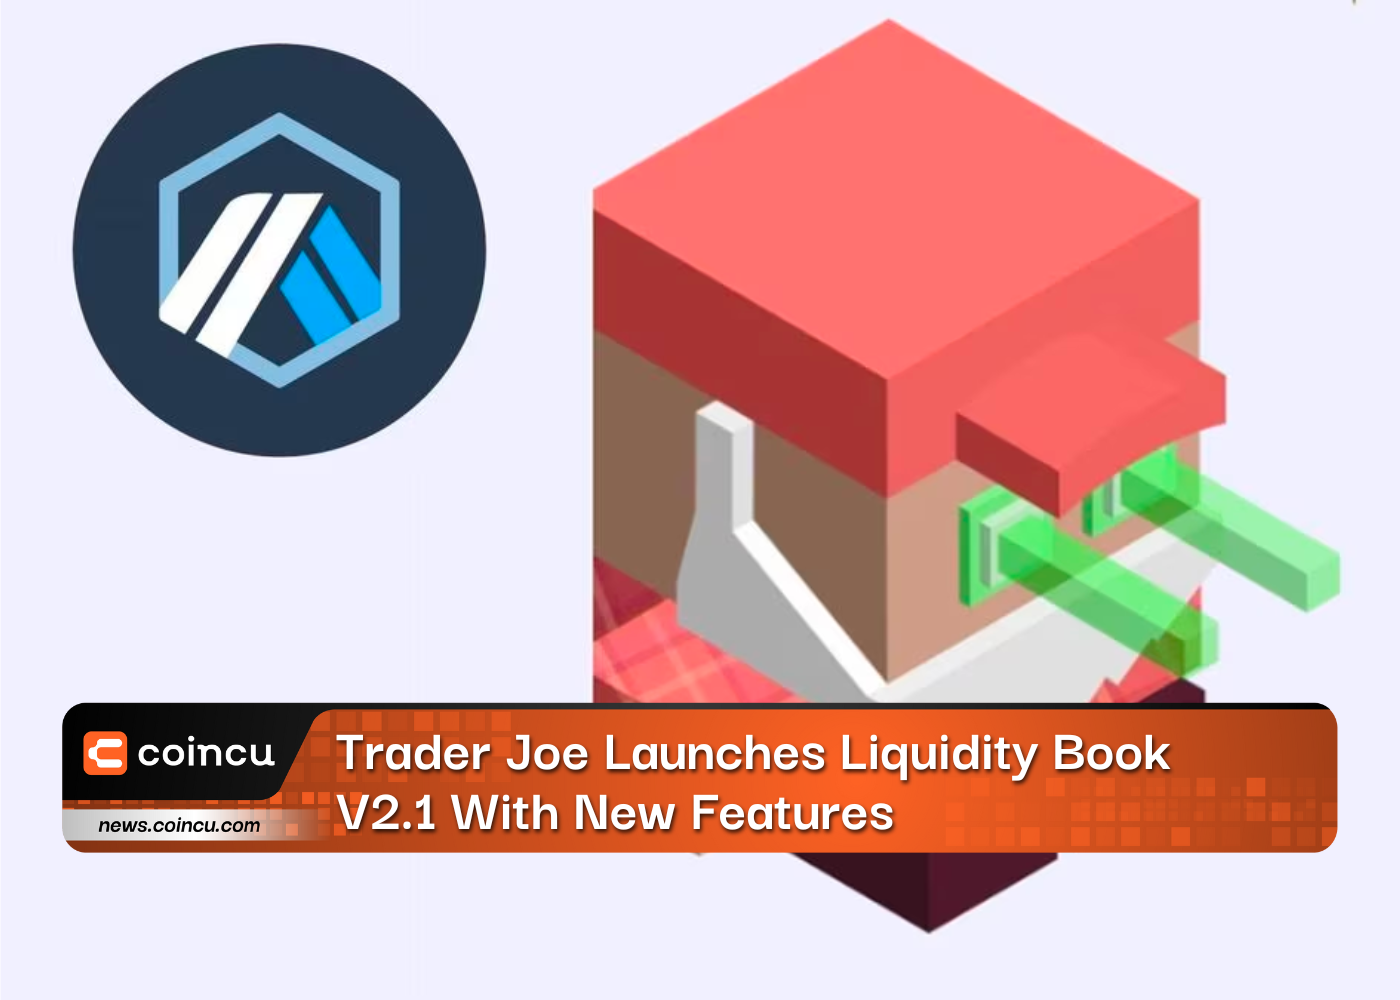 Trader Joe, 새로운 기능을 갖춘 Liquidity Book V2.1 출시